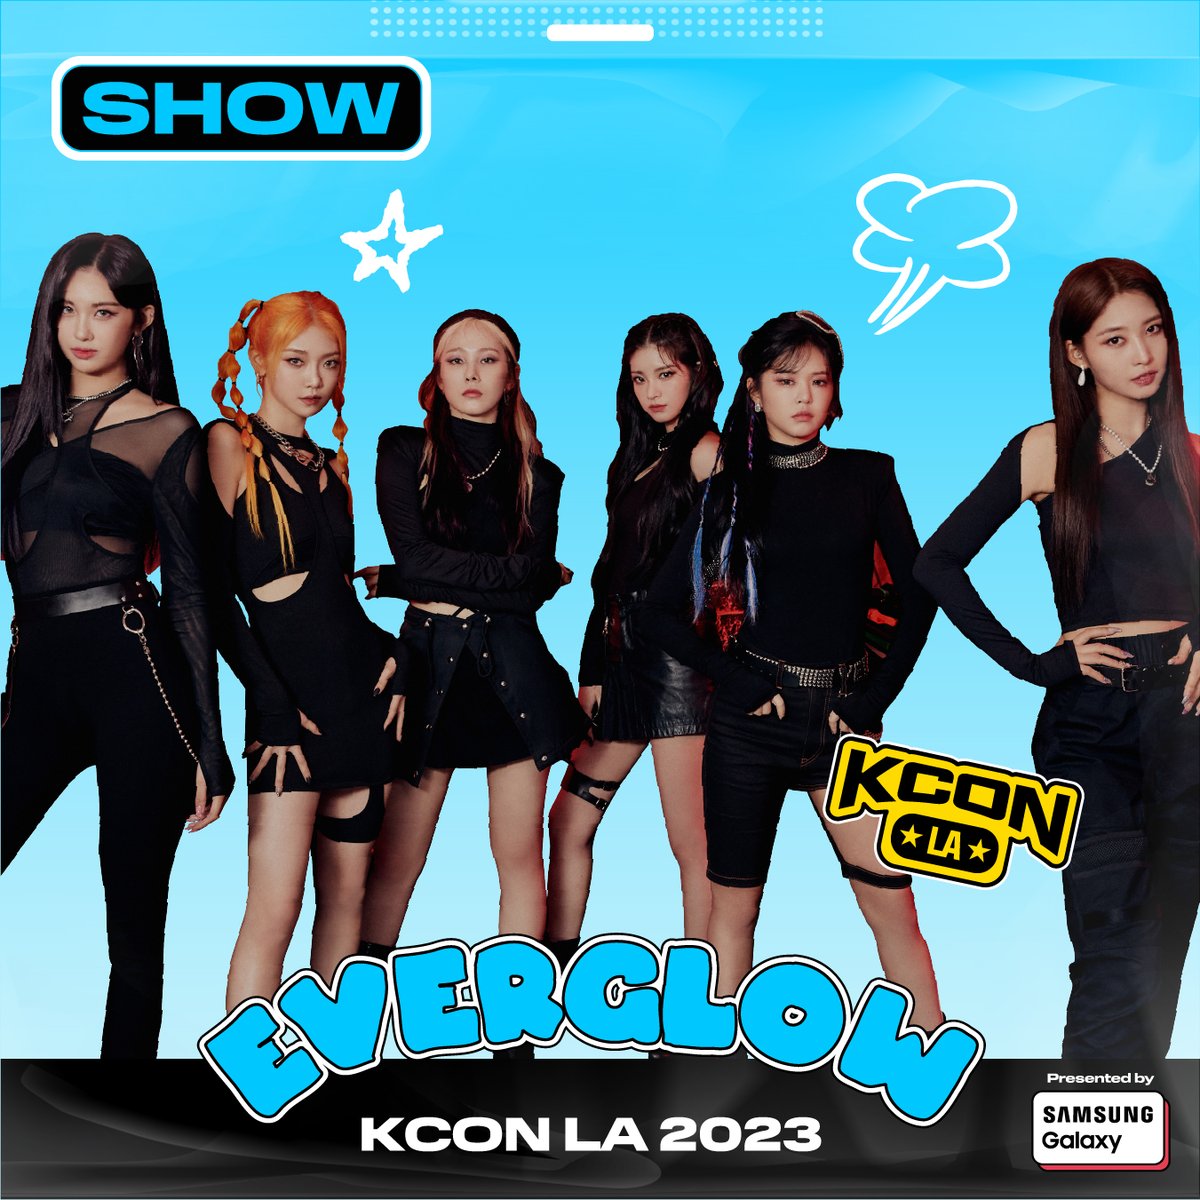 [ #KCONLA2023 ] ARTIST LINEUP  

#EVERGLOW  

🎈 
KCON LA 2023 
8.18.~8.20.  
Let’s #KCON!